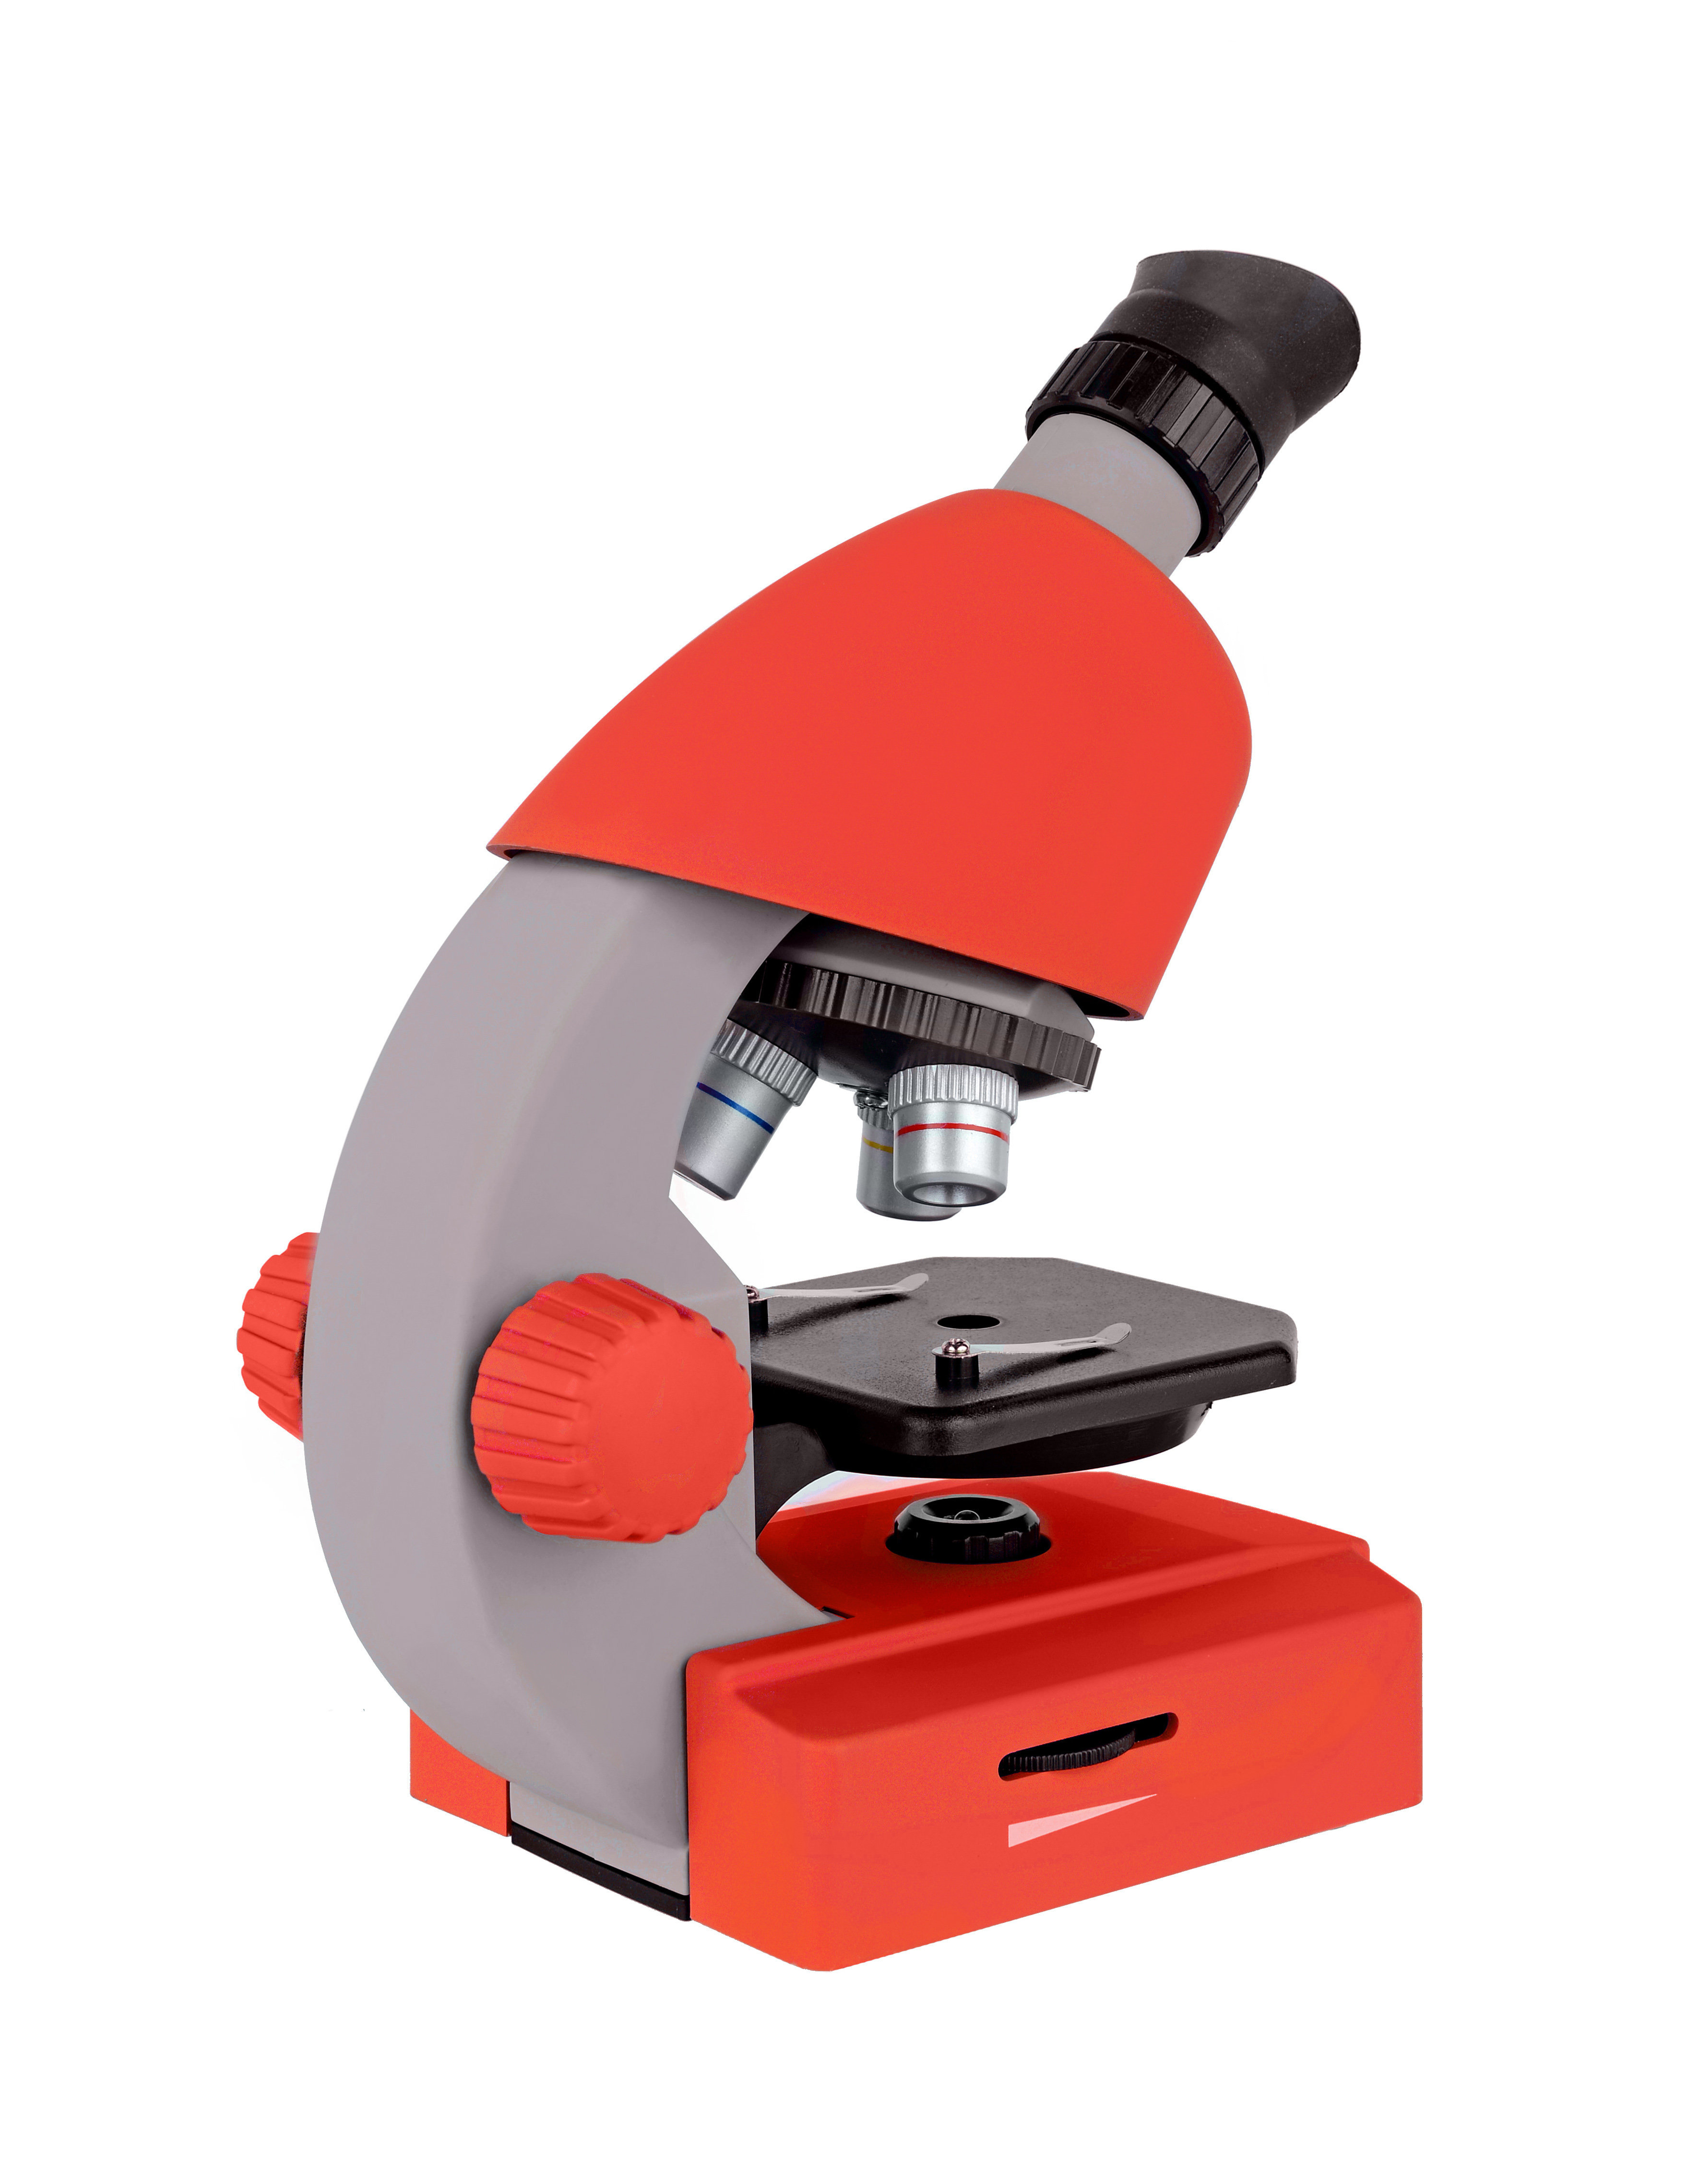 40X-2000X Microscope pour Enfants Adultes, Microscope